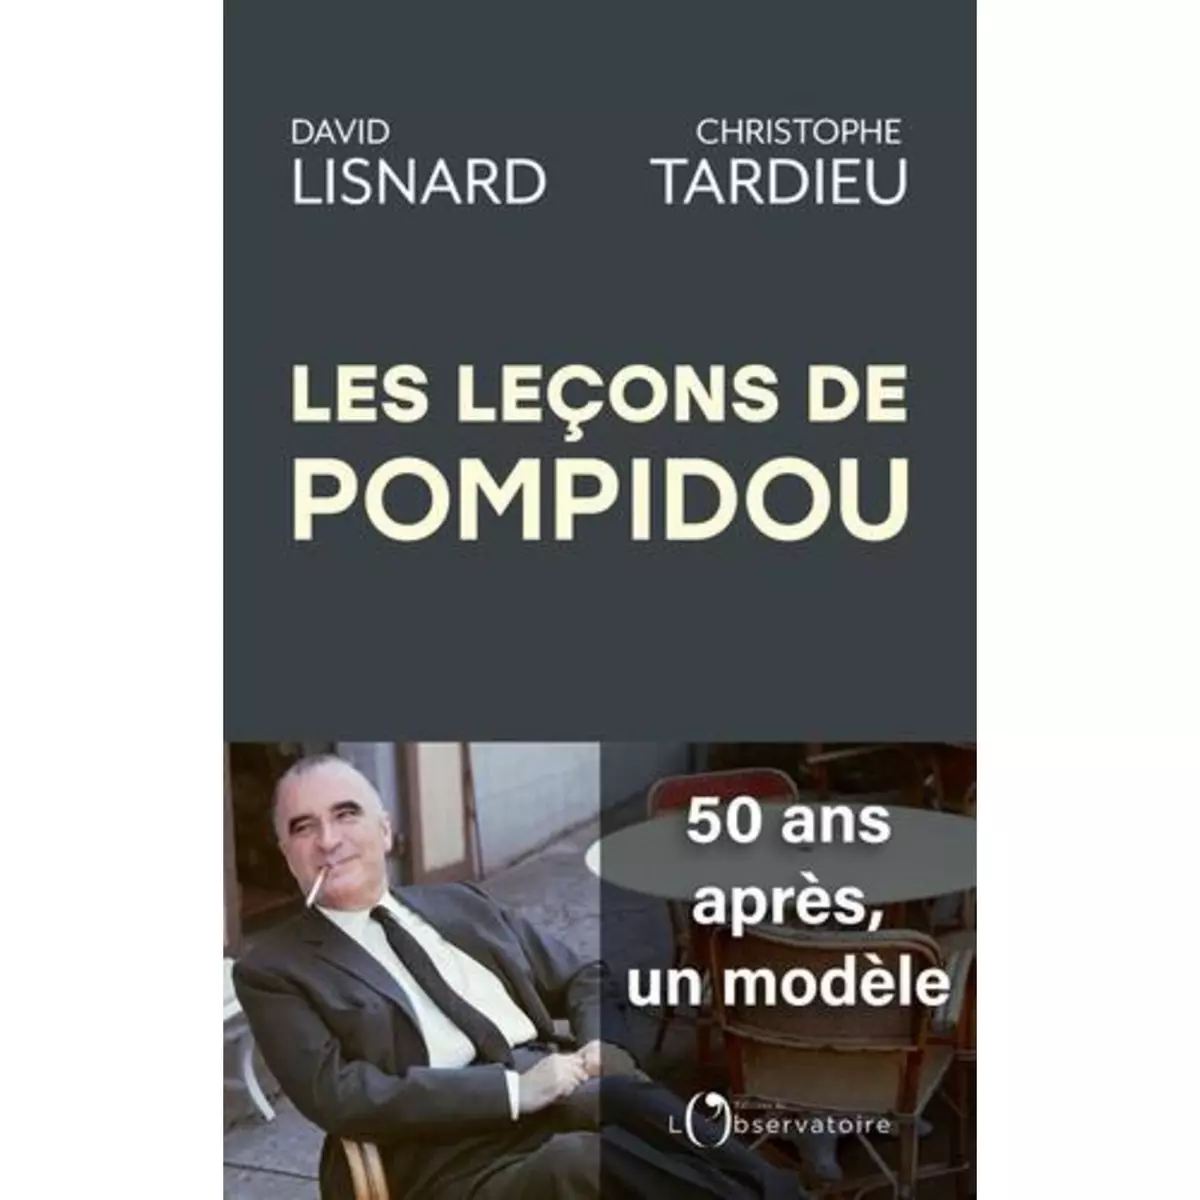  LES LECONS DE POMPIDOU, Lisnard David